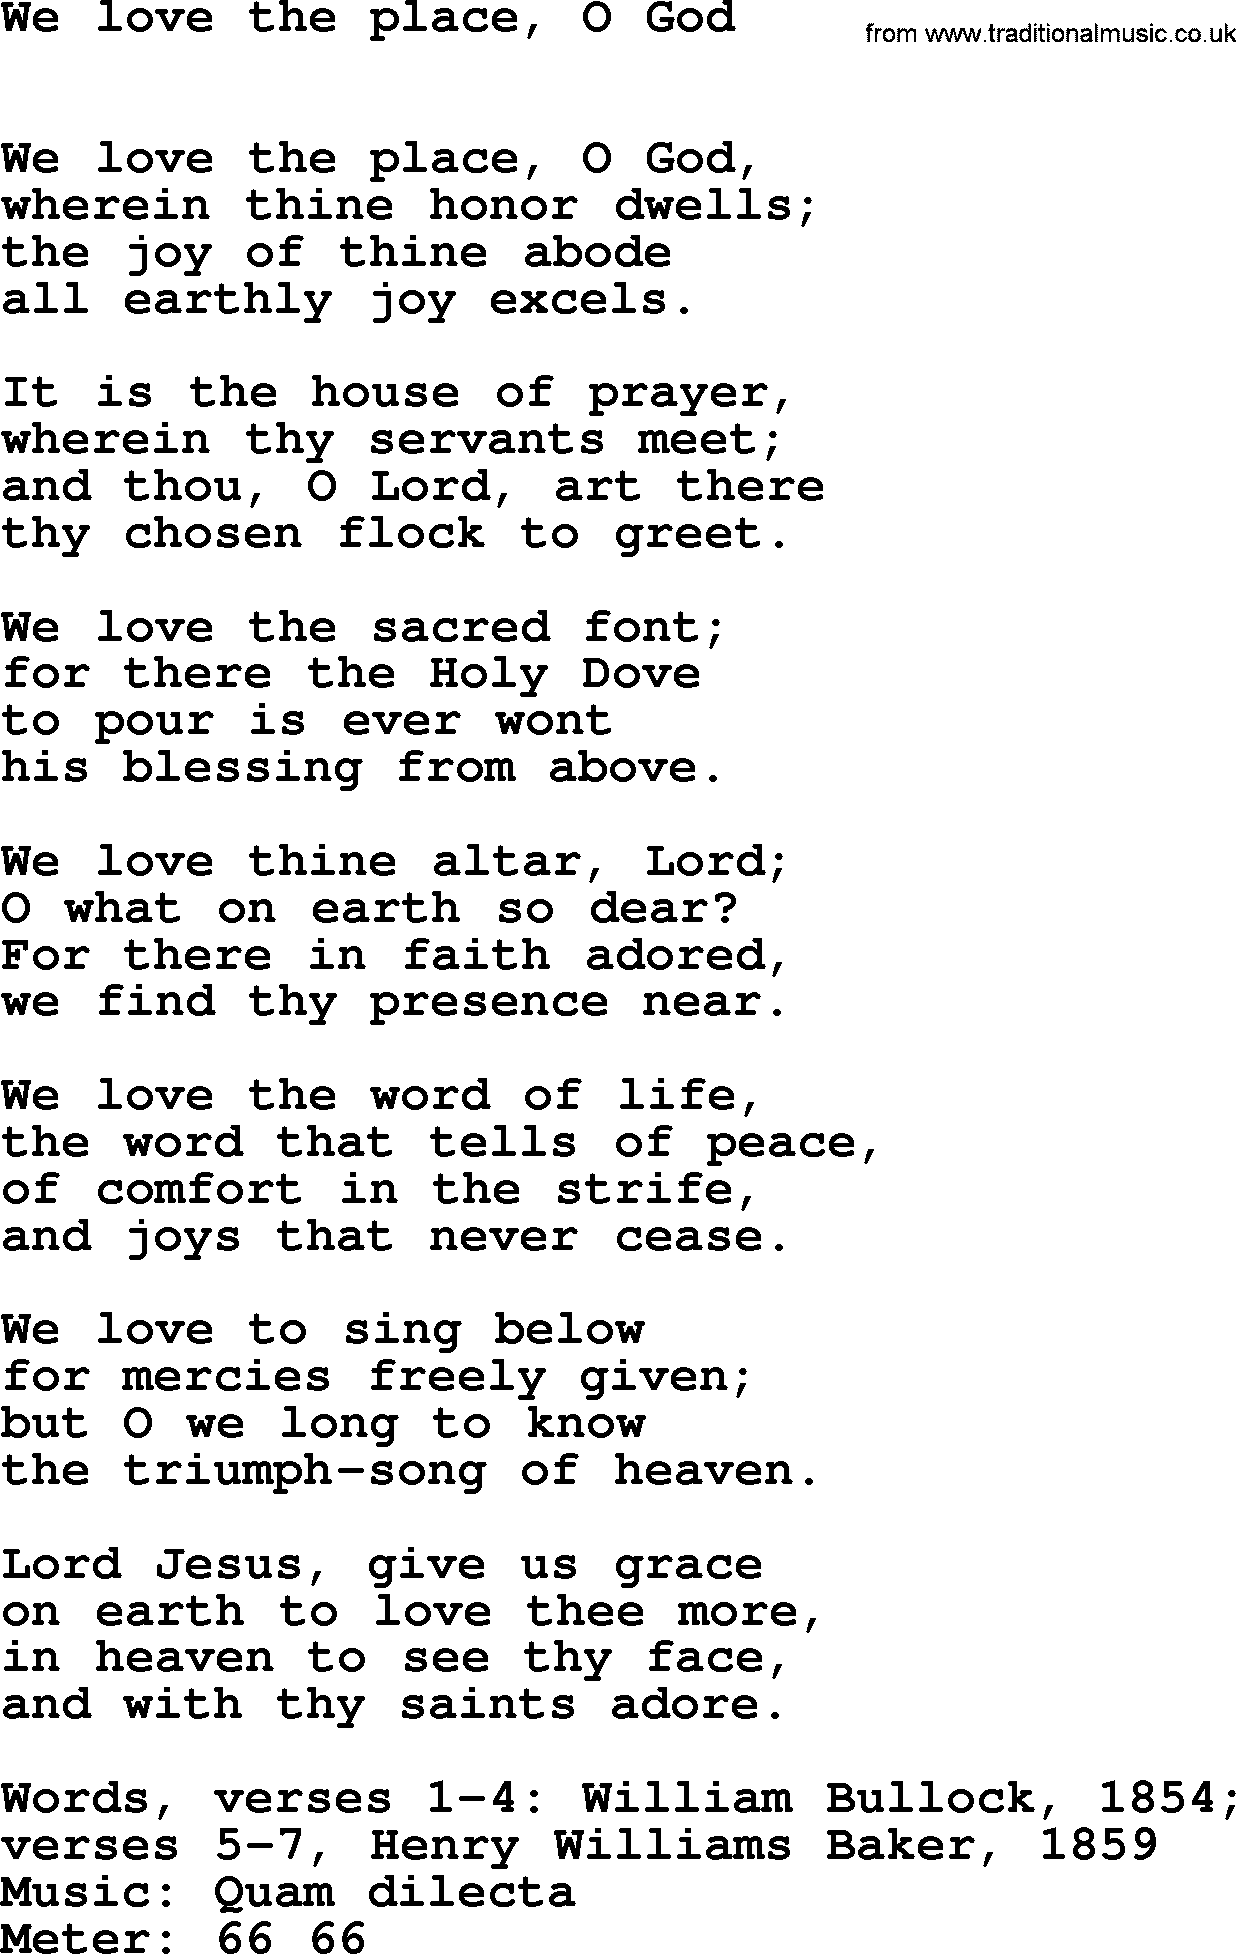 Book of Common Praise Hymn: We Love The Place, O God.txt lyrics with midi music